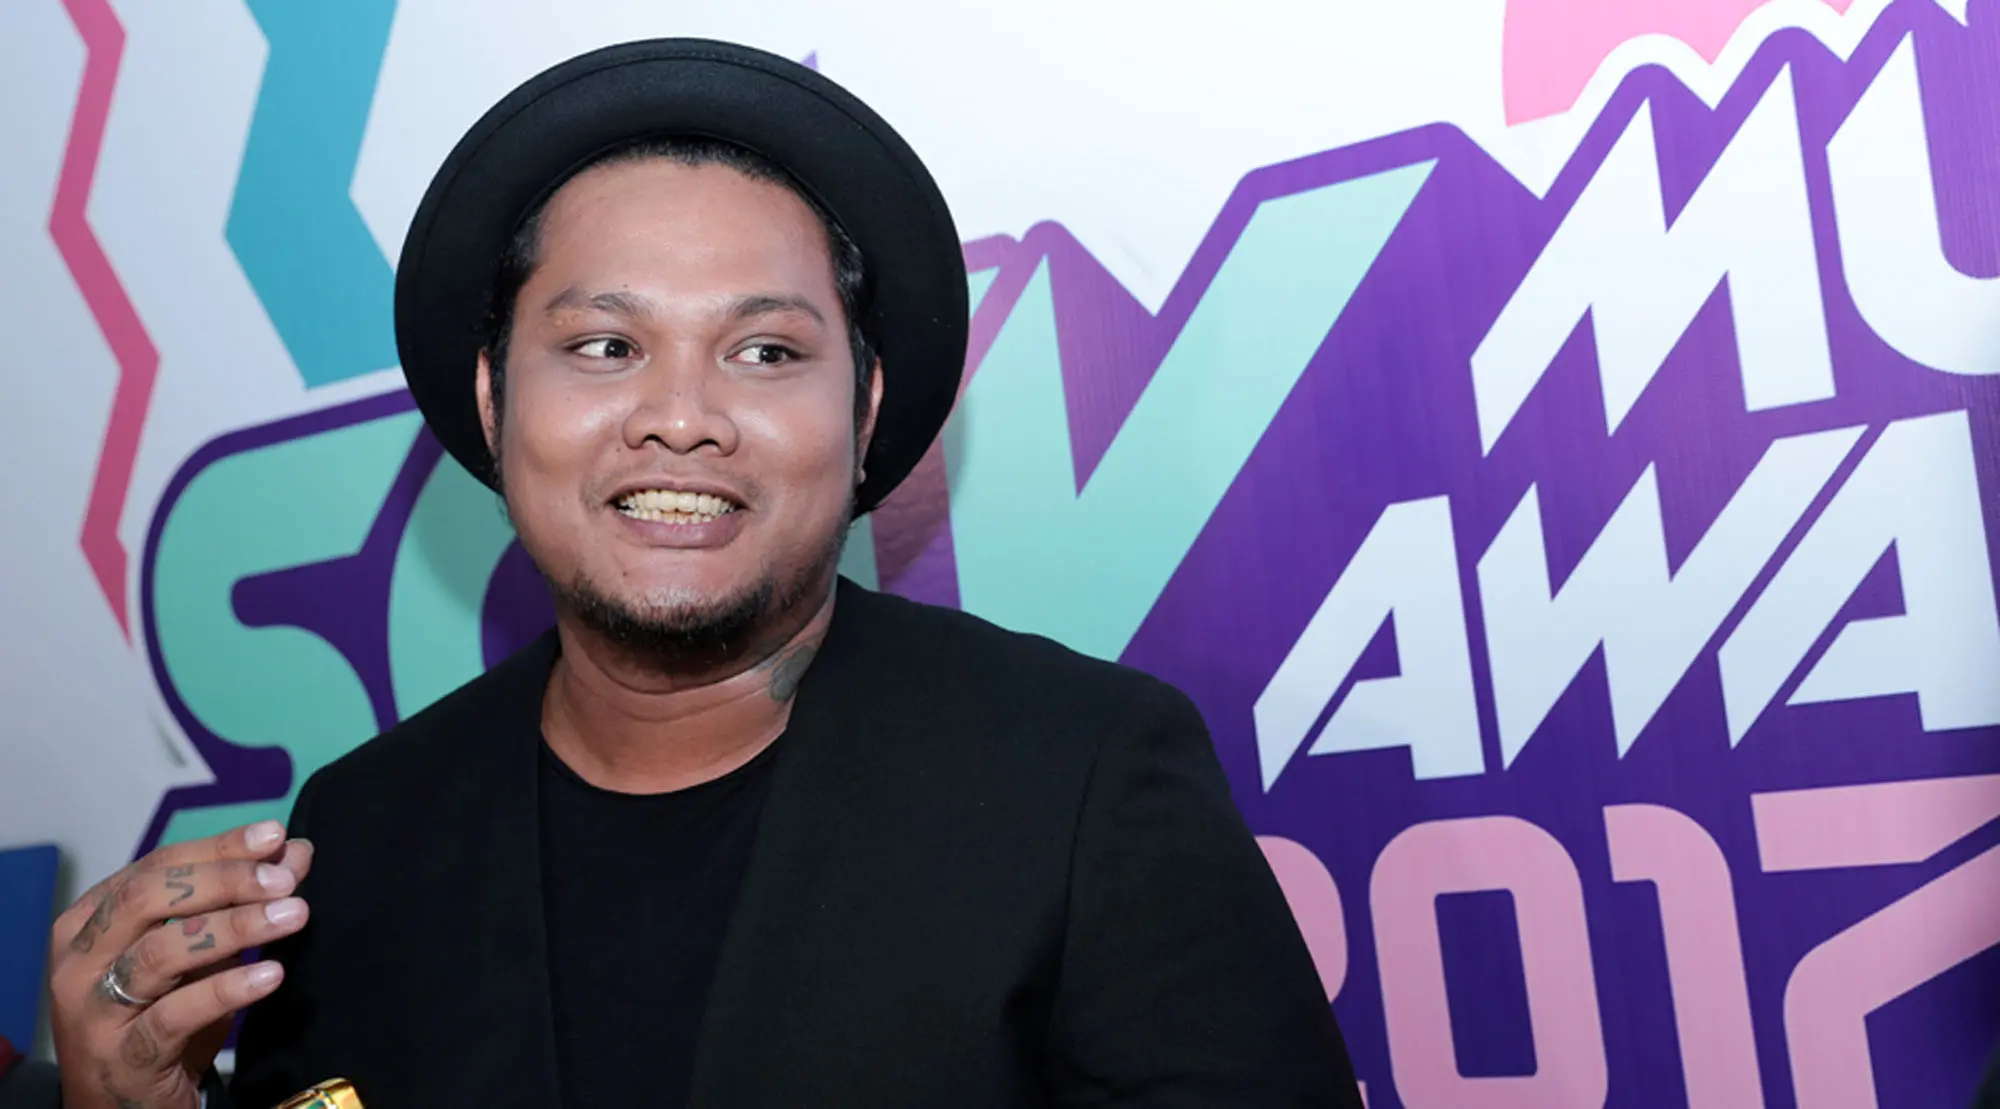 Virgoun di SCTV Music Awards 2017 (Deki Prayoga/Bintang.com)